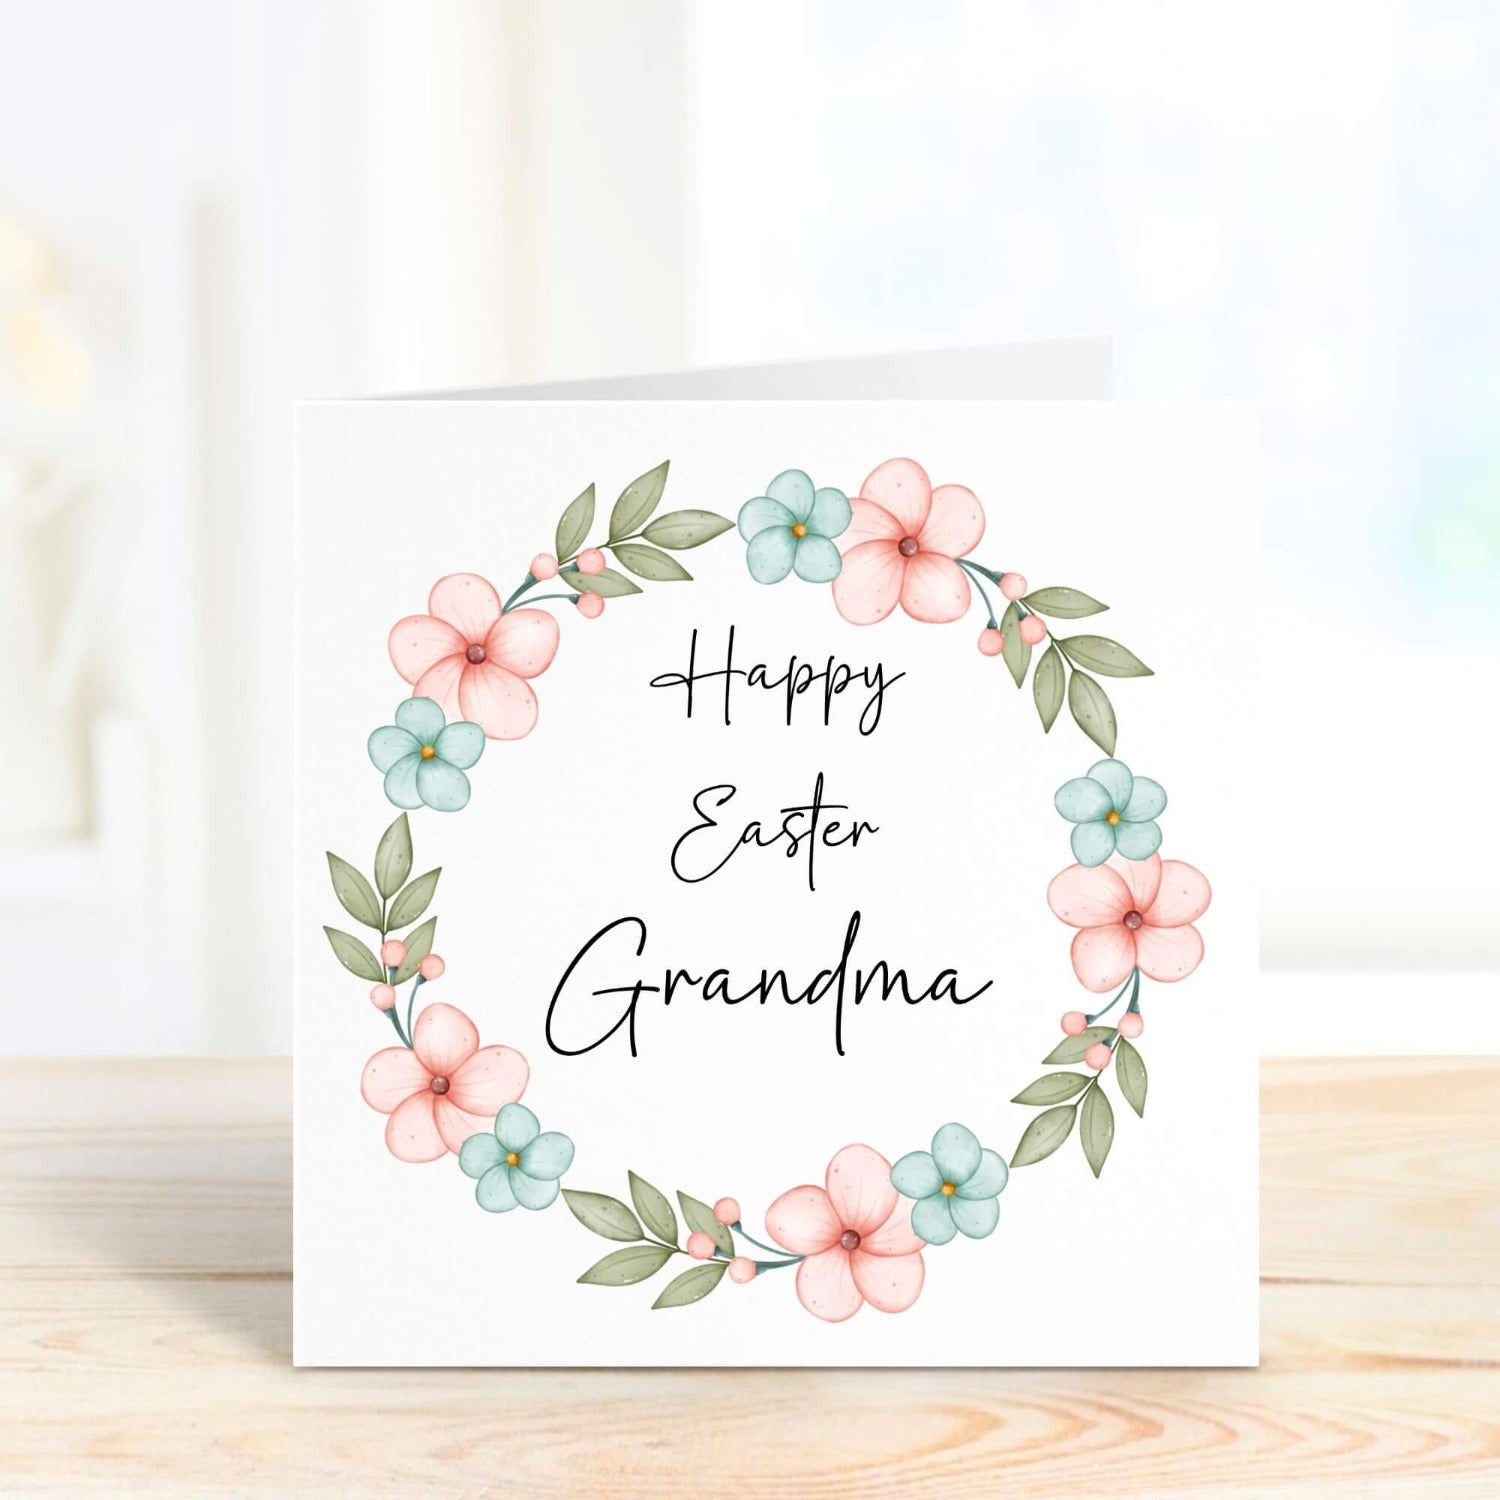 personalised easter card fro grandma